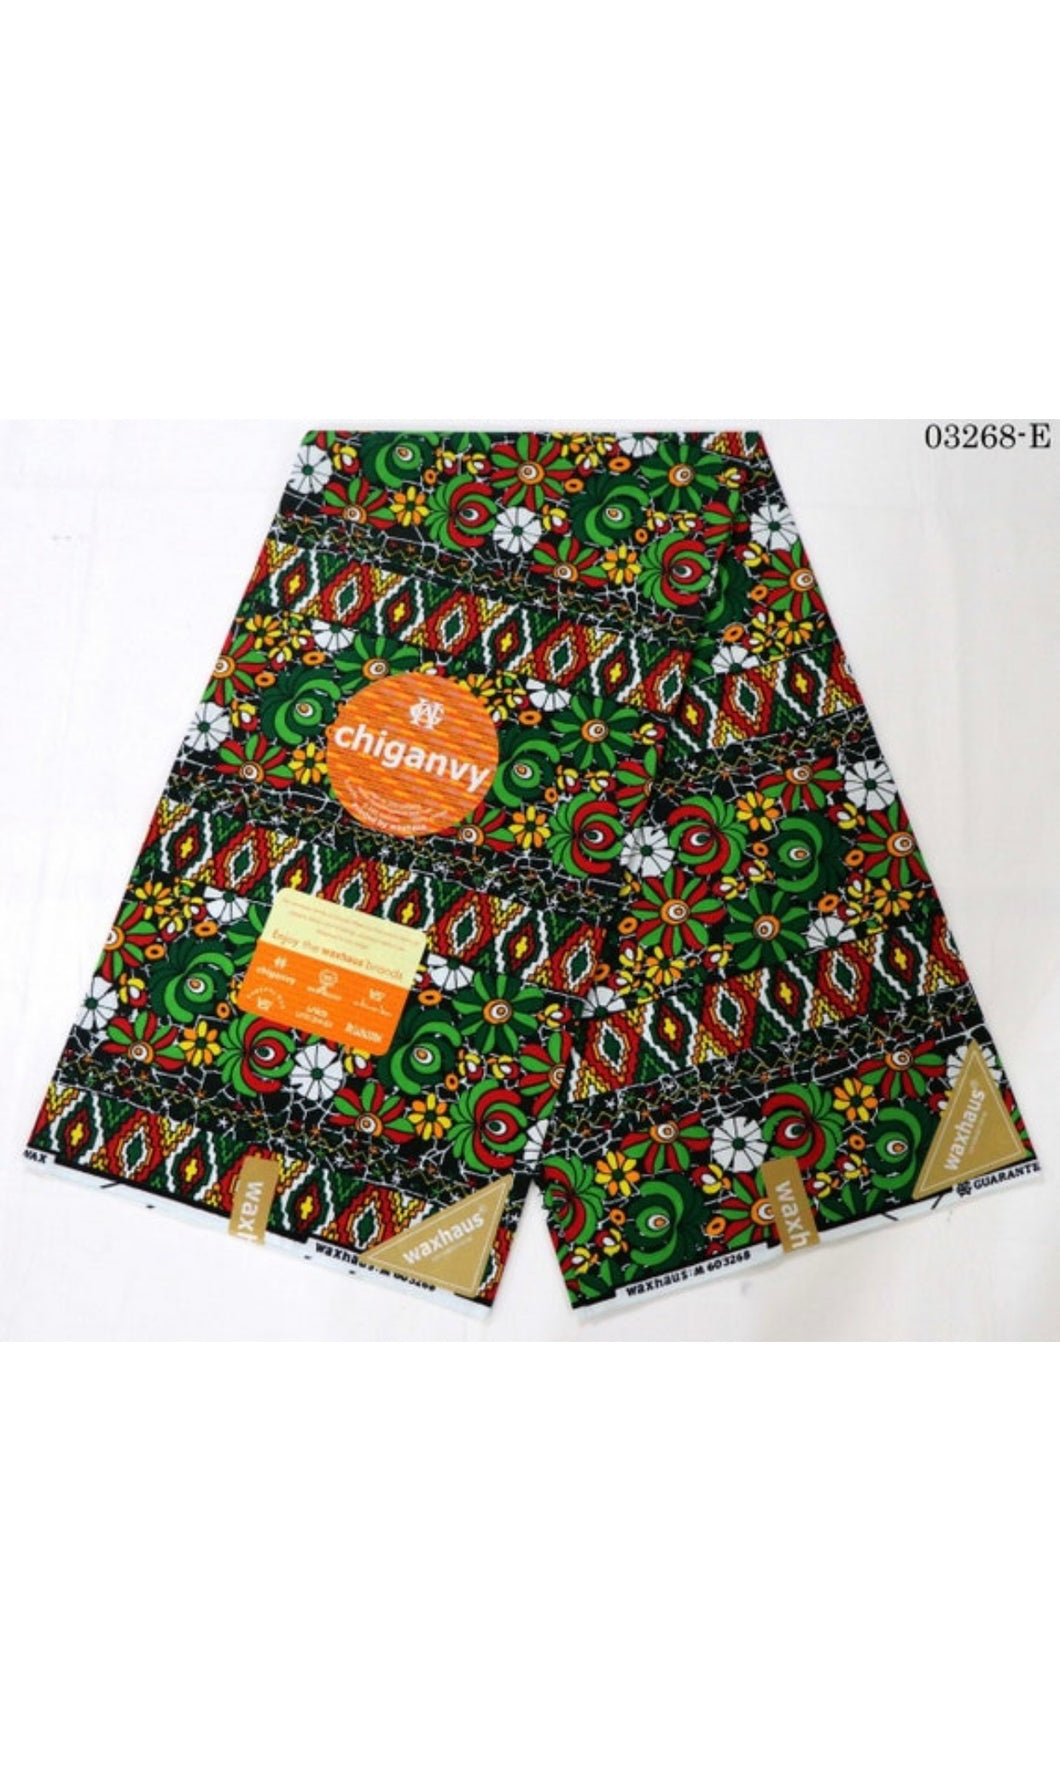 Fabric wholesale/ Kente fabric Ankara Print/african fabric by the yard/bl